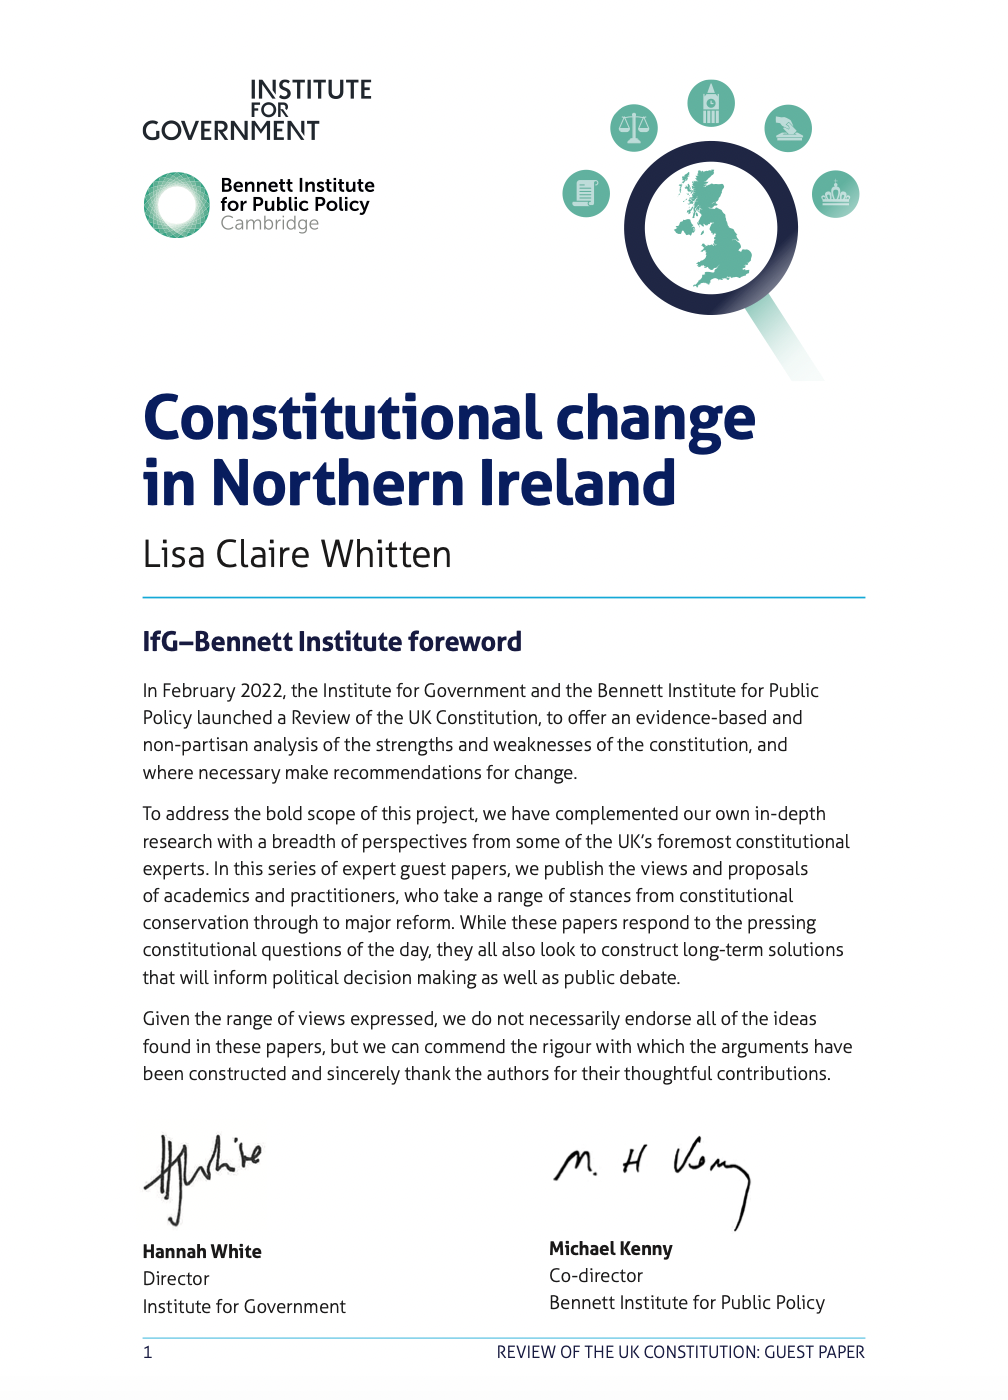 Constitutional change in Northern Ireland